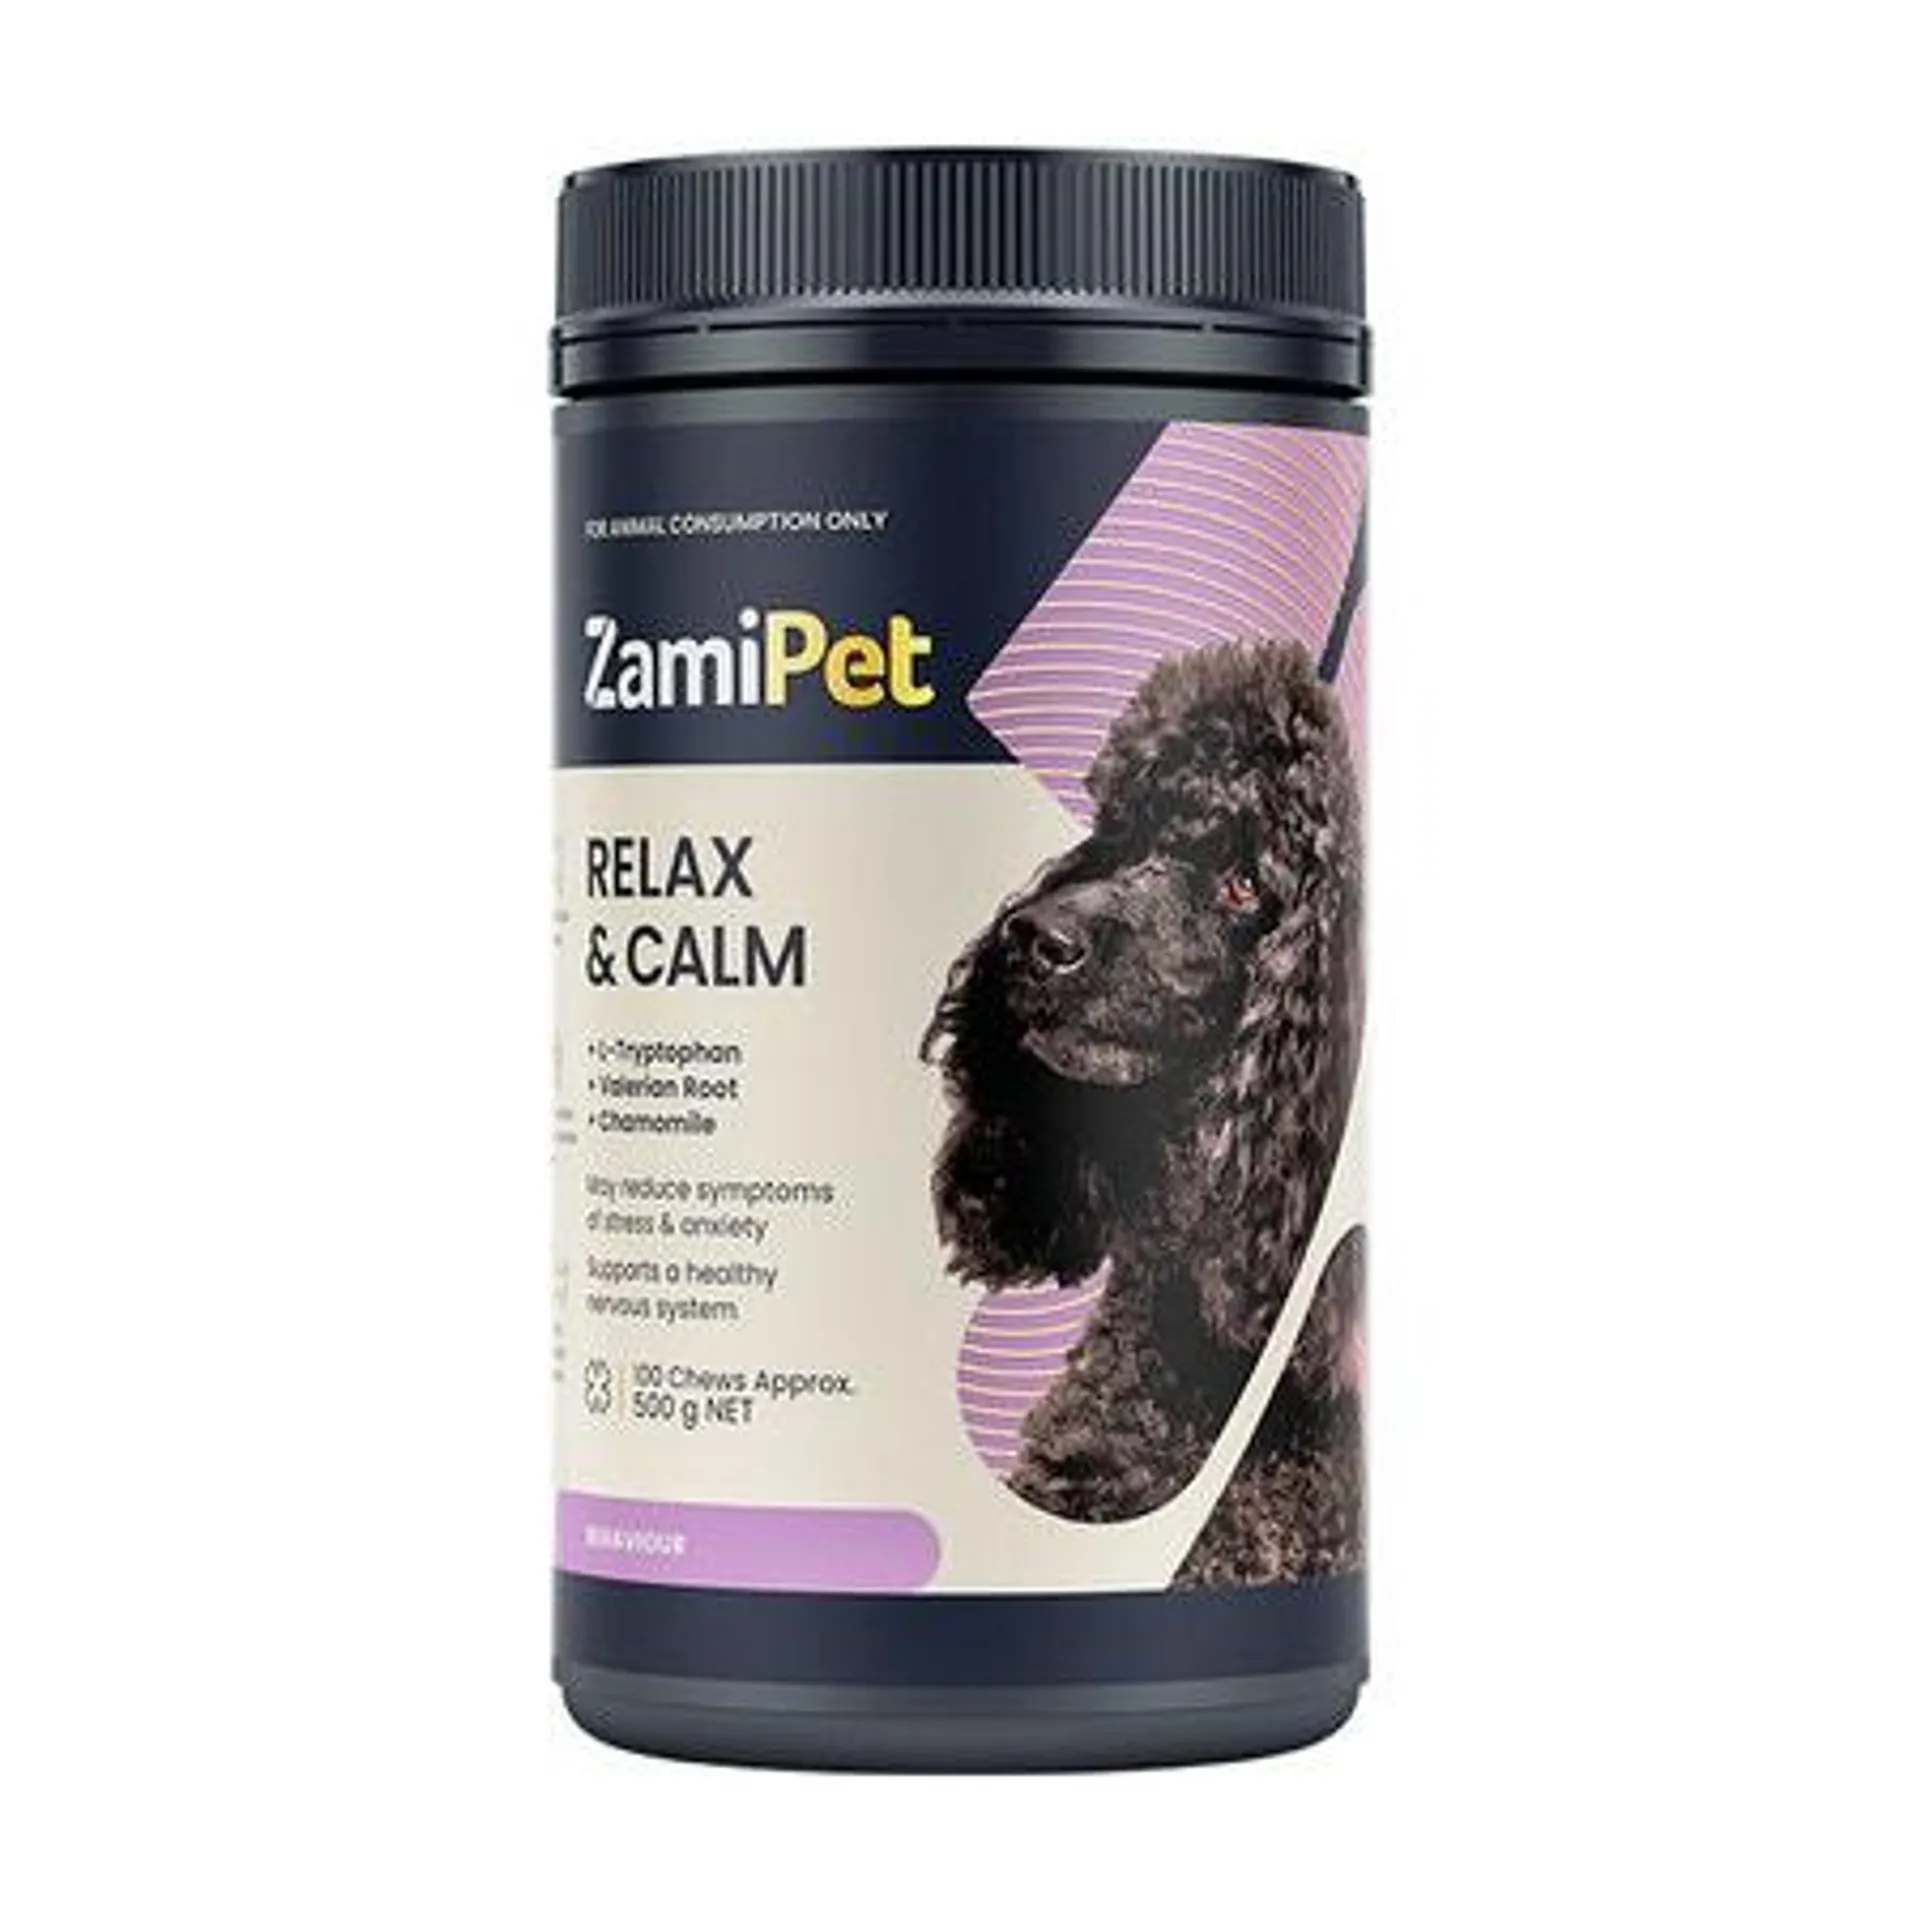 ZamiPet Relax & Calm Dog Chews 100PK